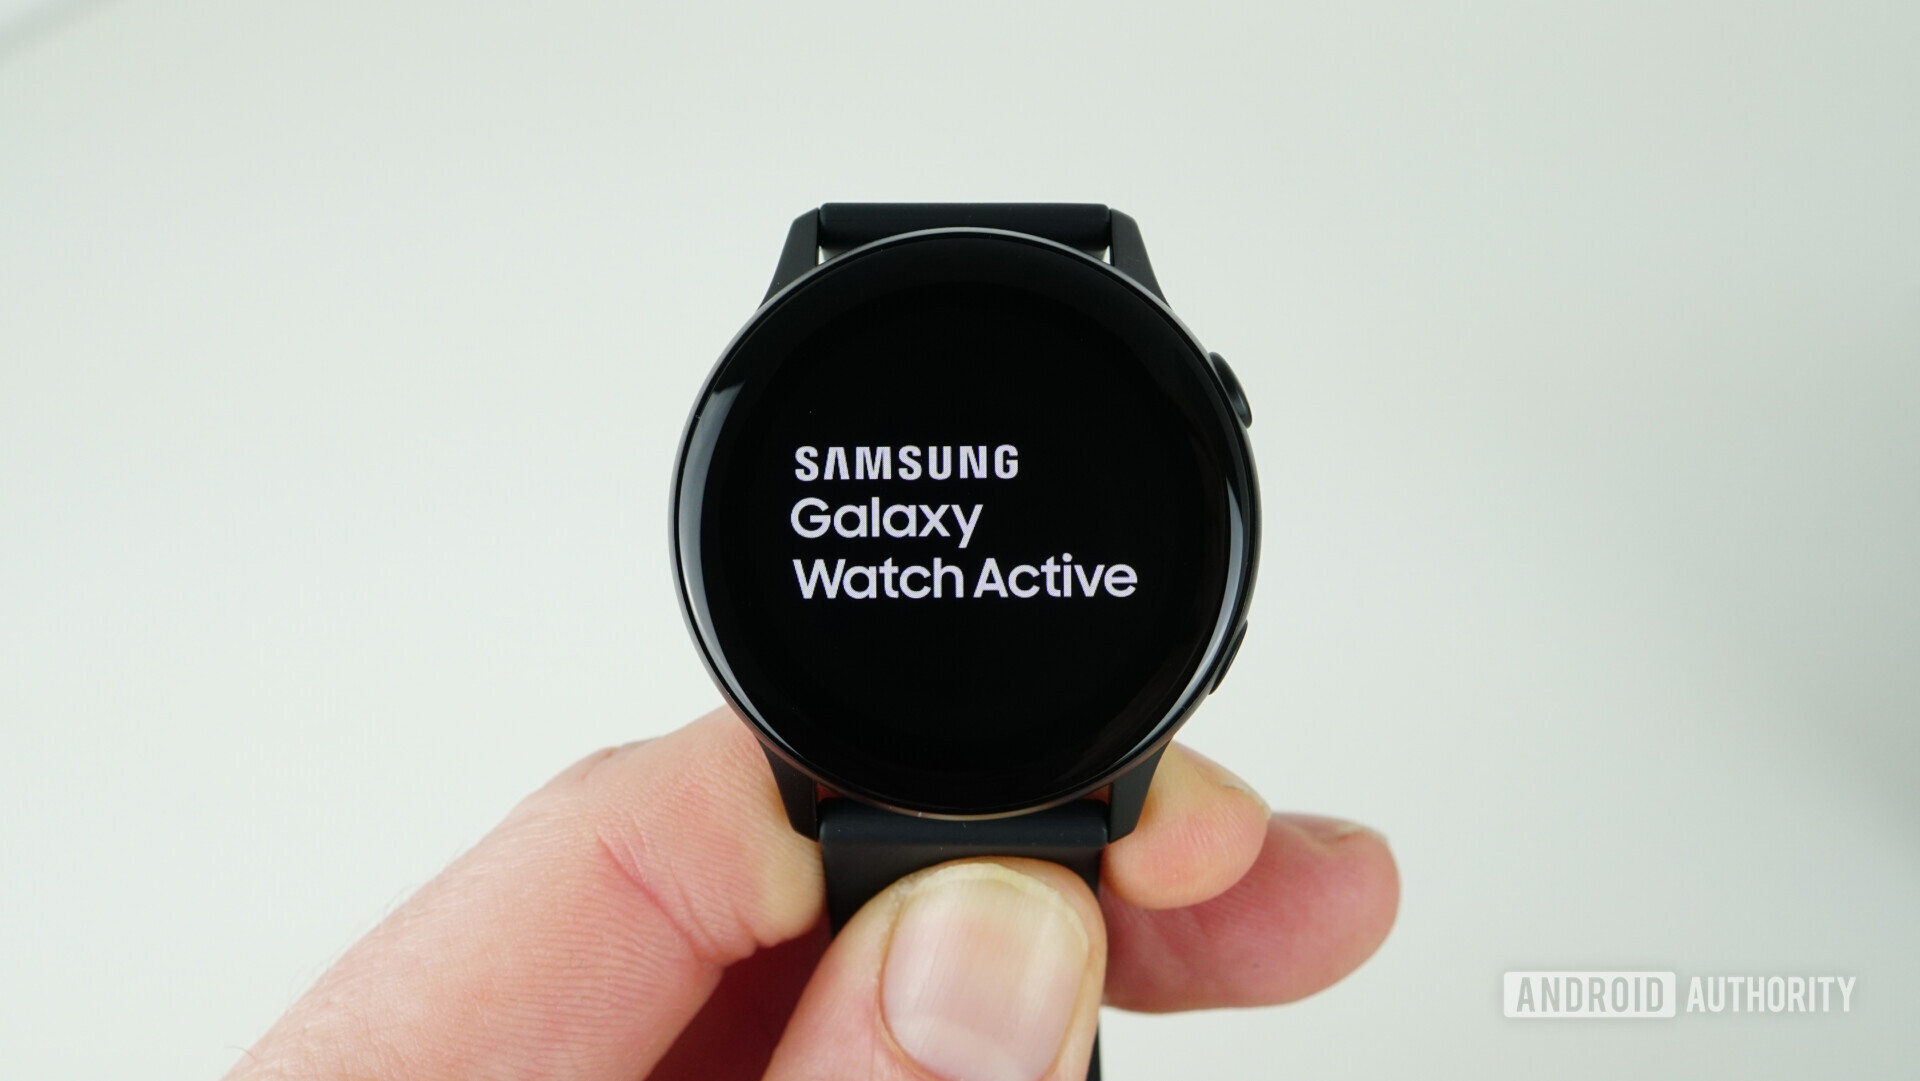 Samsung Galaxy Watch Active boot screen